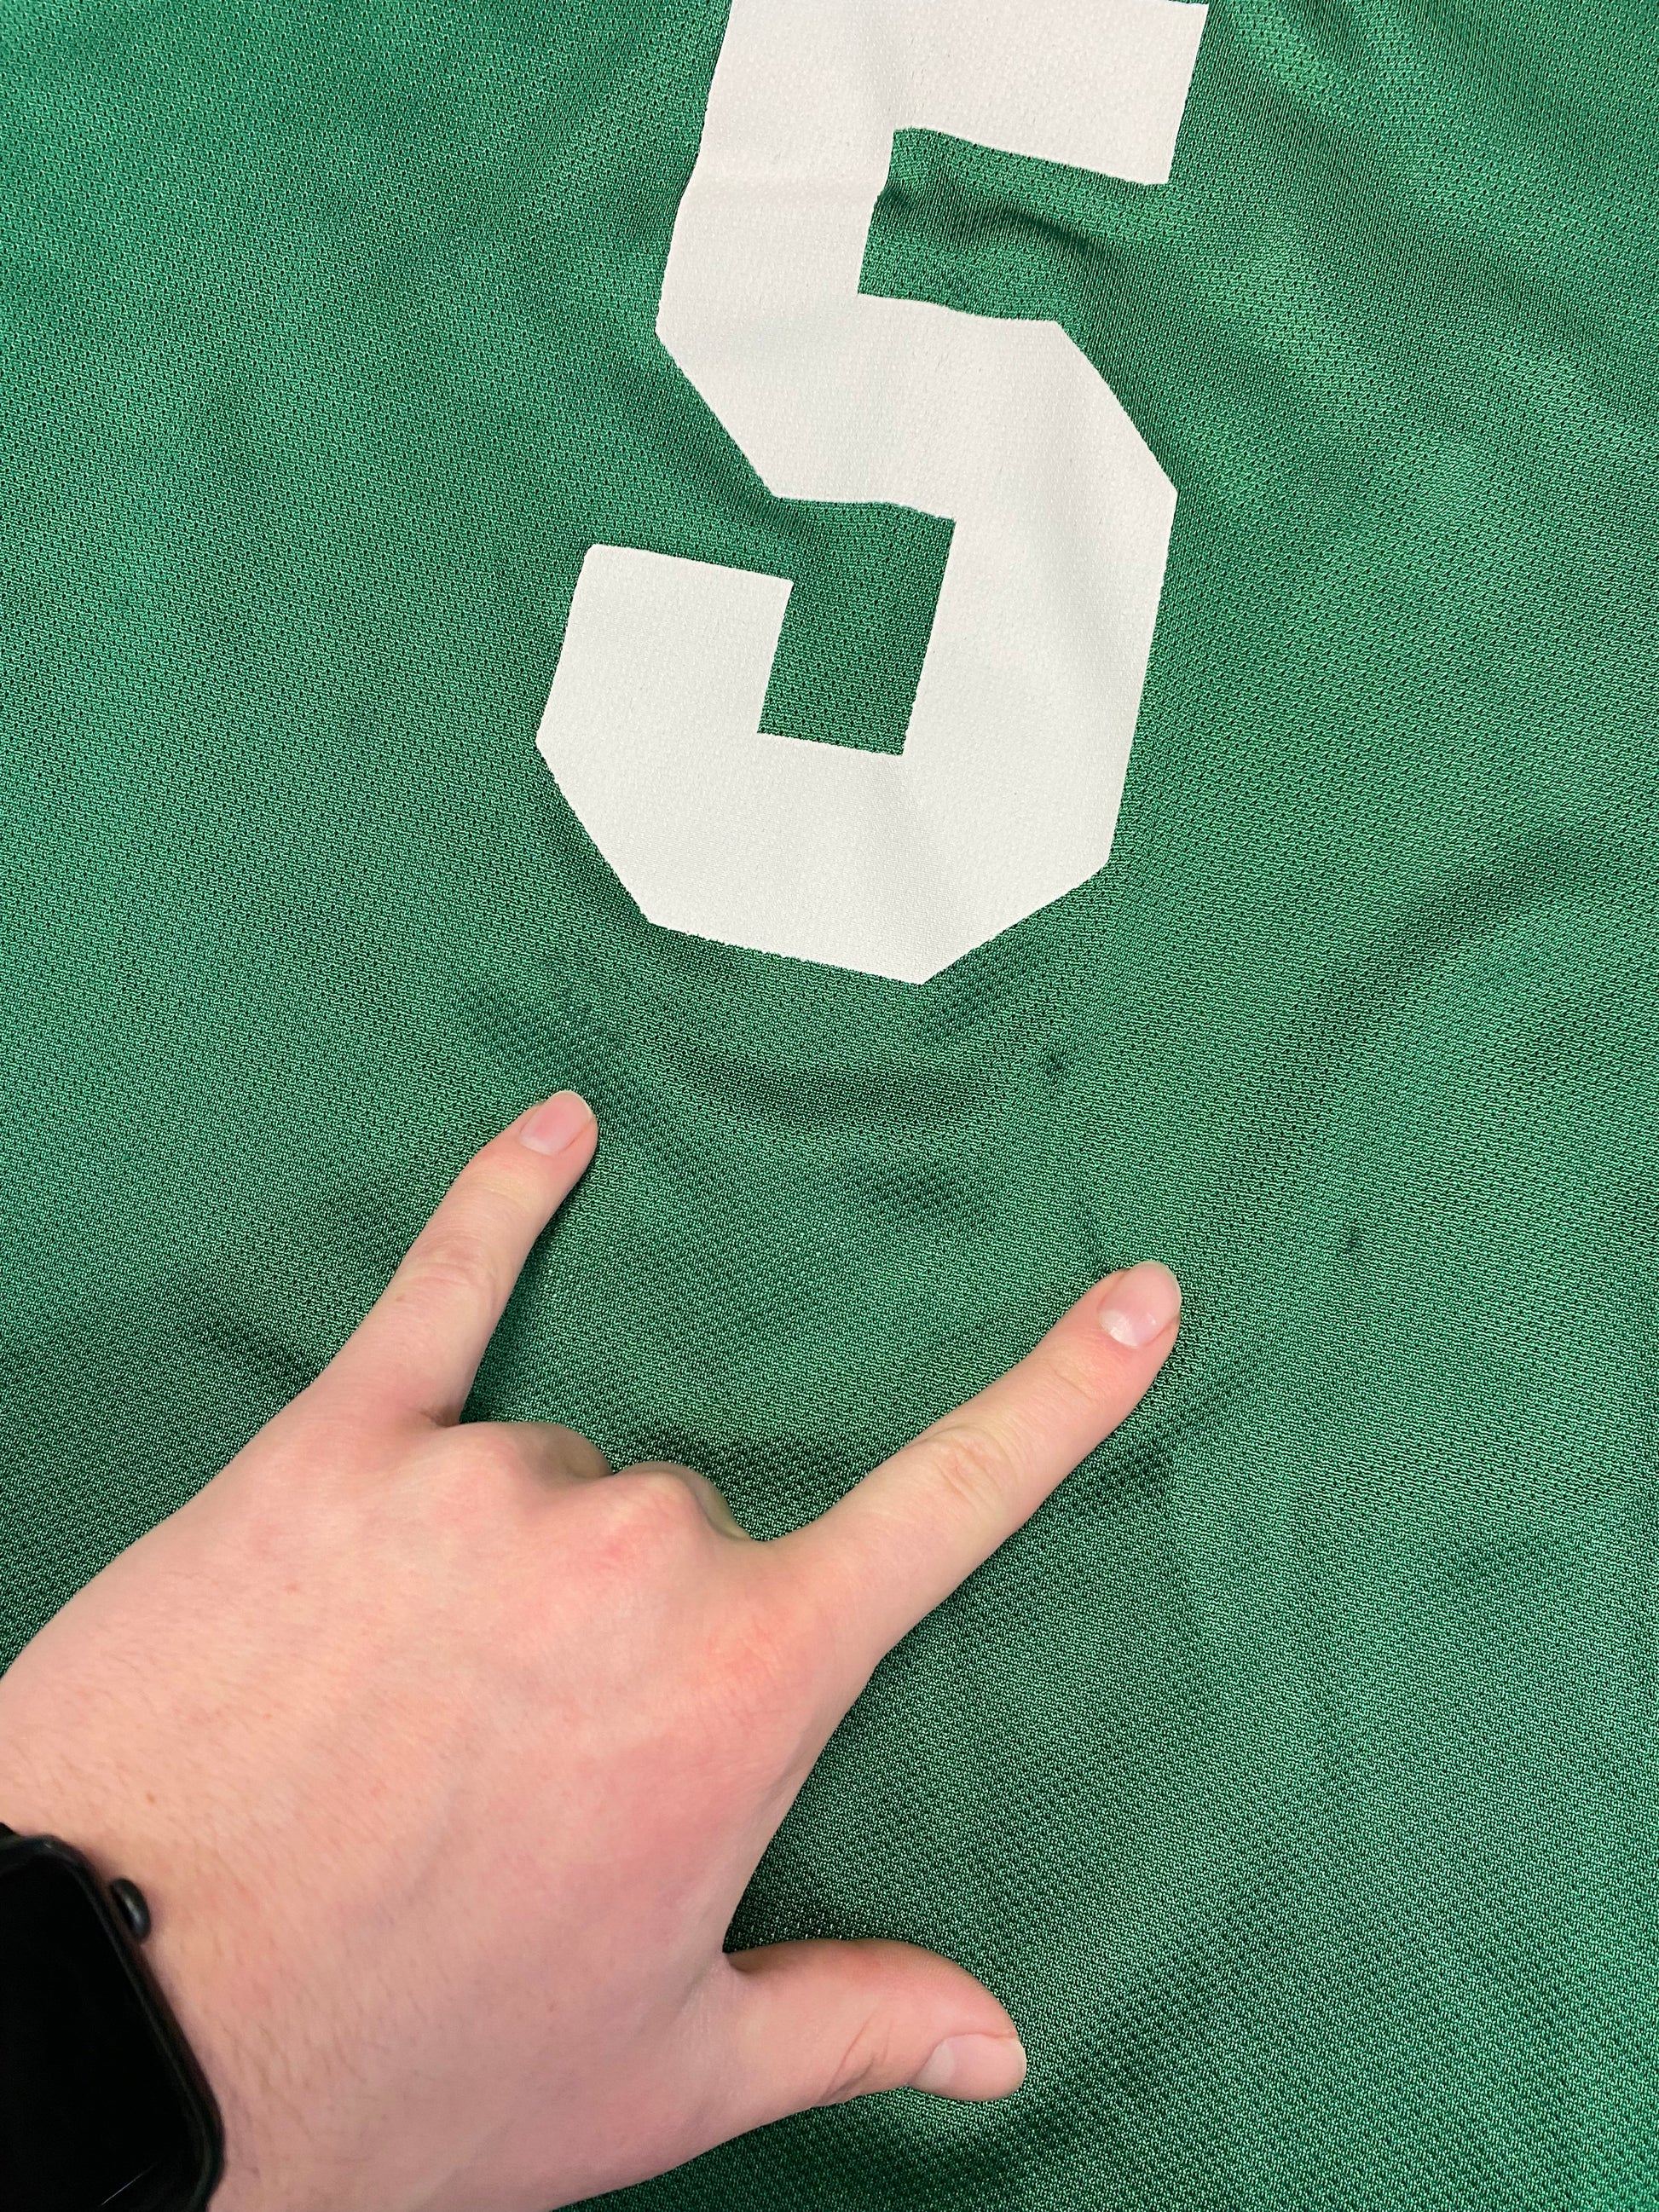 Nike Boston Celtics Paul Pierce Throwback NBA Jersey – TheVaultCT